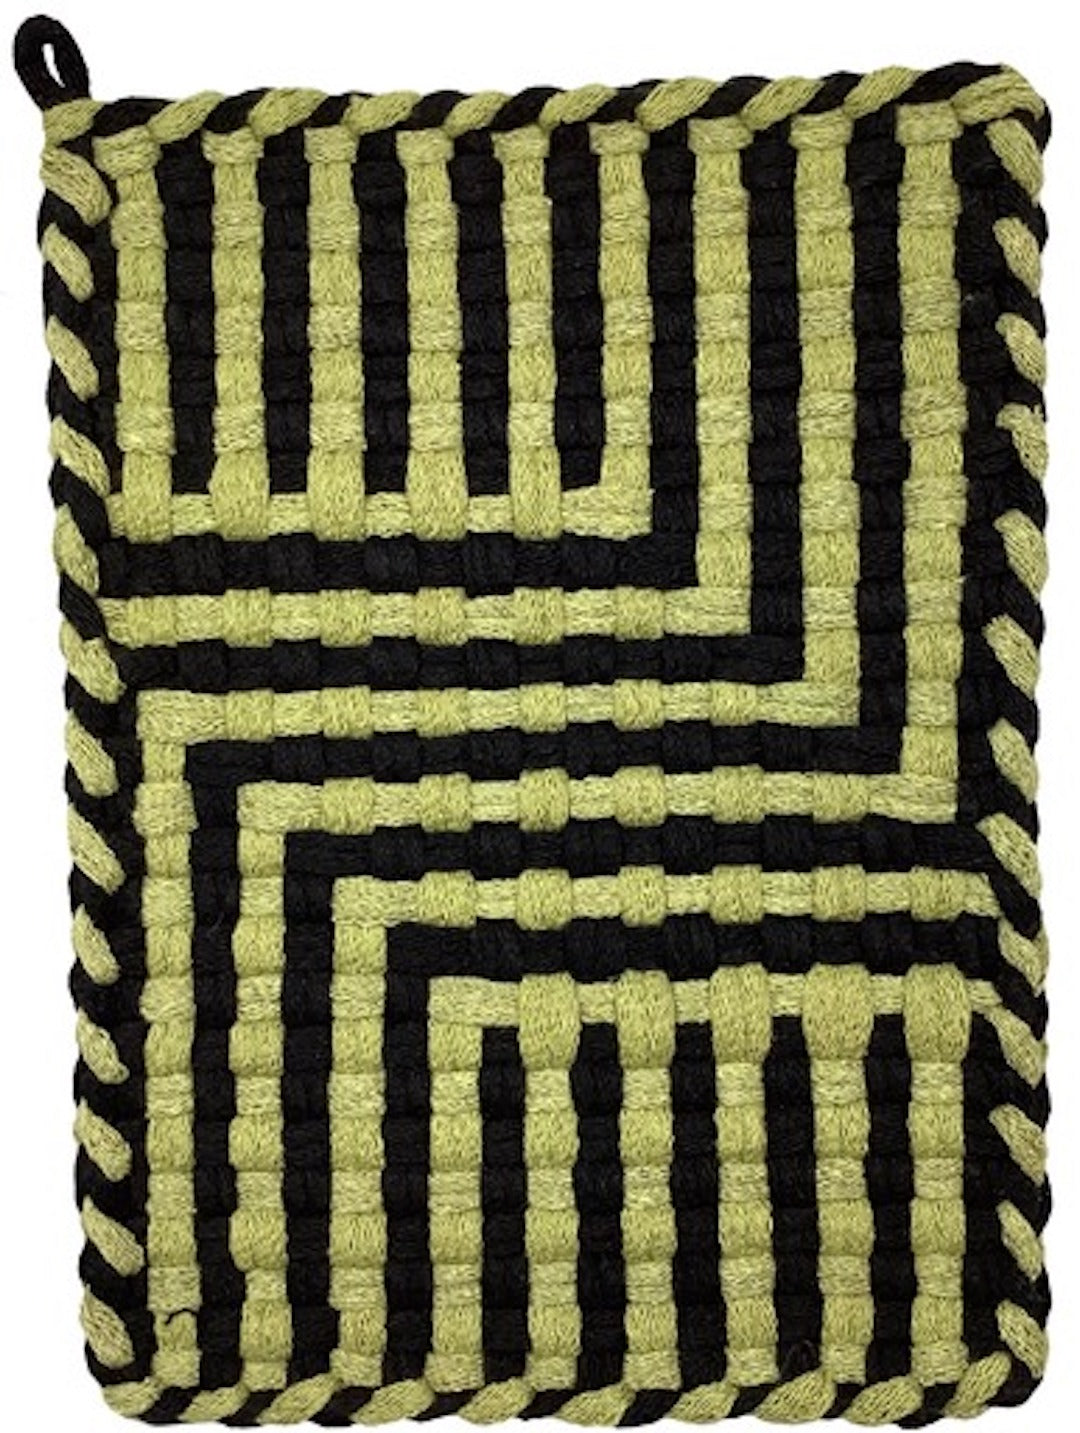 Limited edition weavings from Deborah Jean Cohen